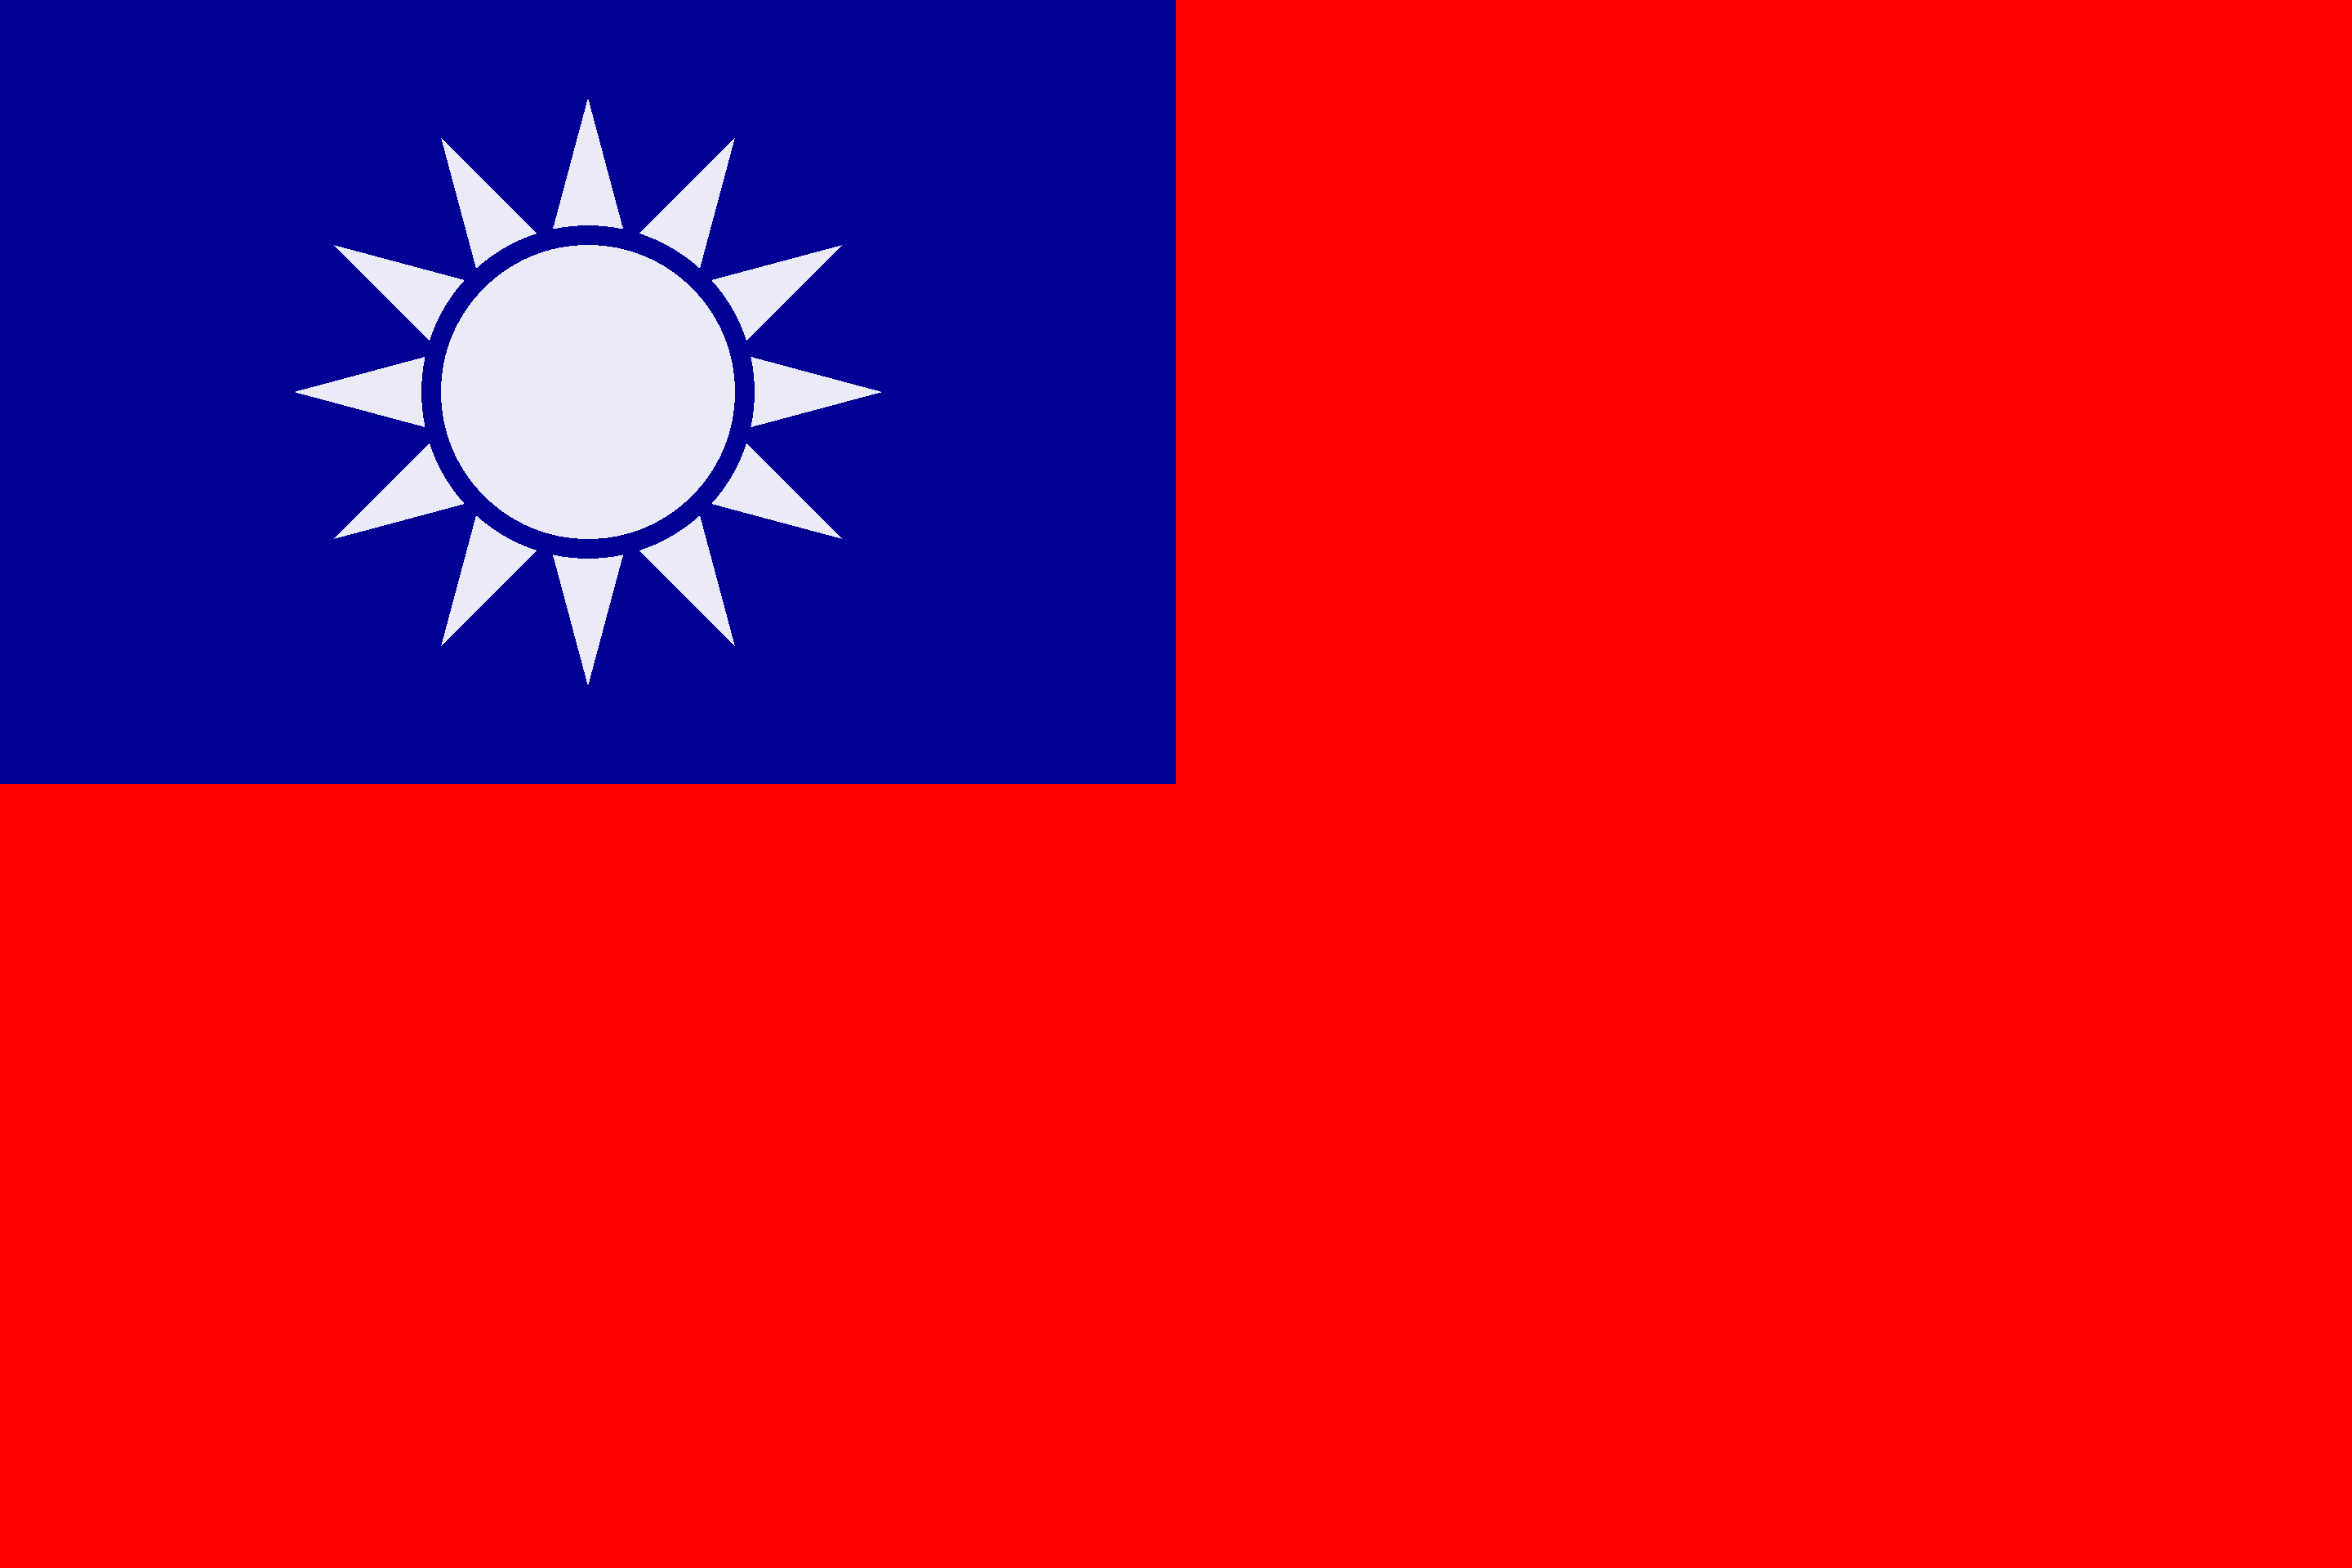 Taiwan Flag - Republic of China Taiwan Drone Laws